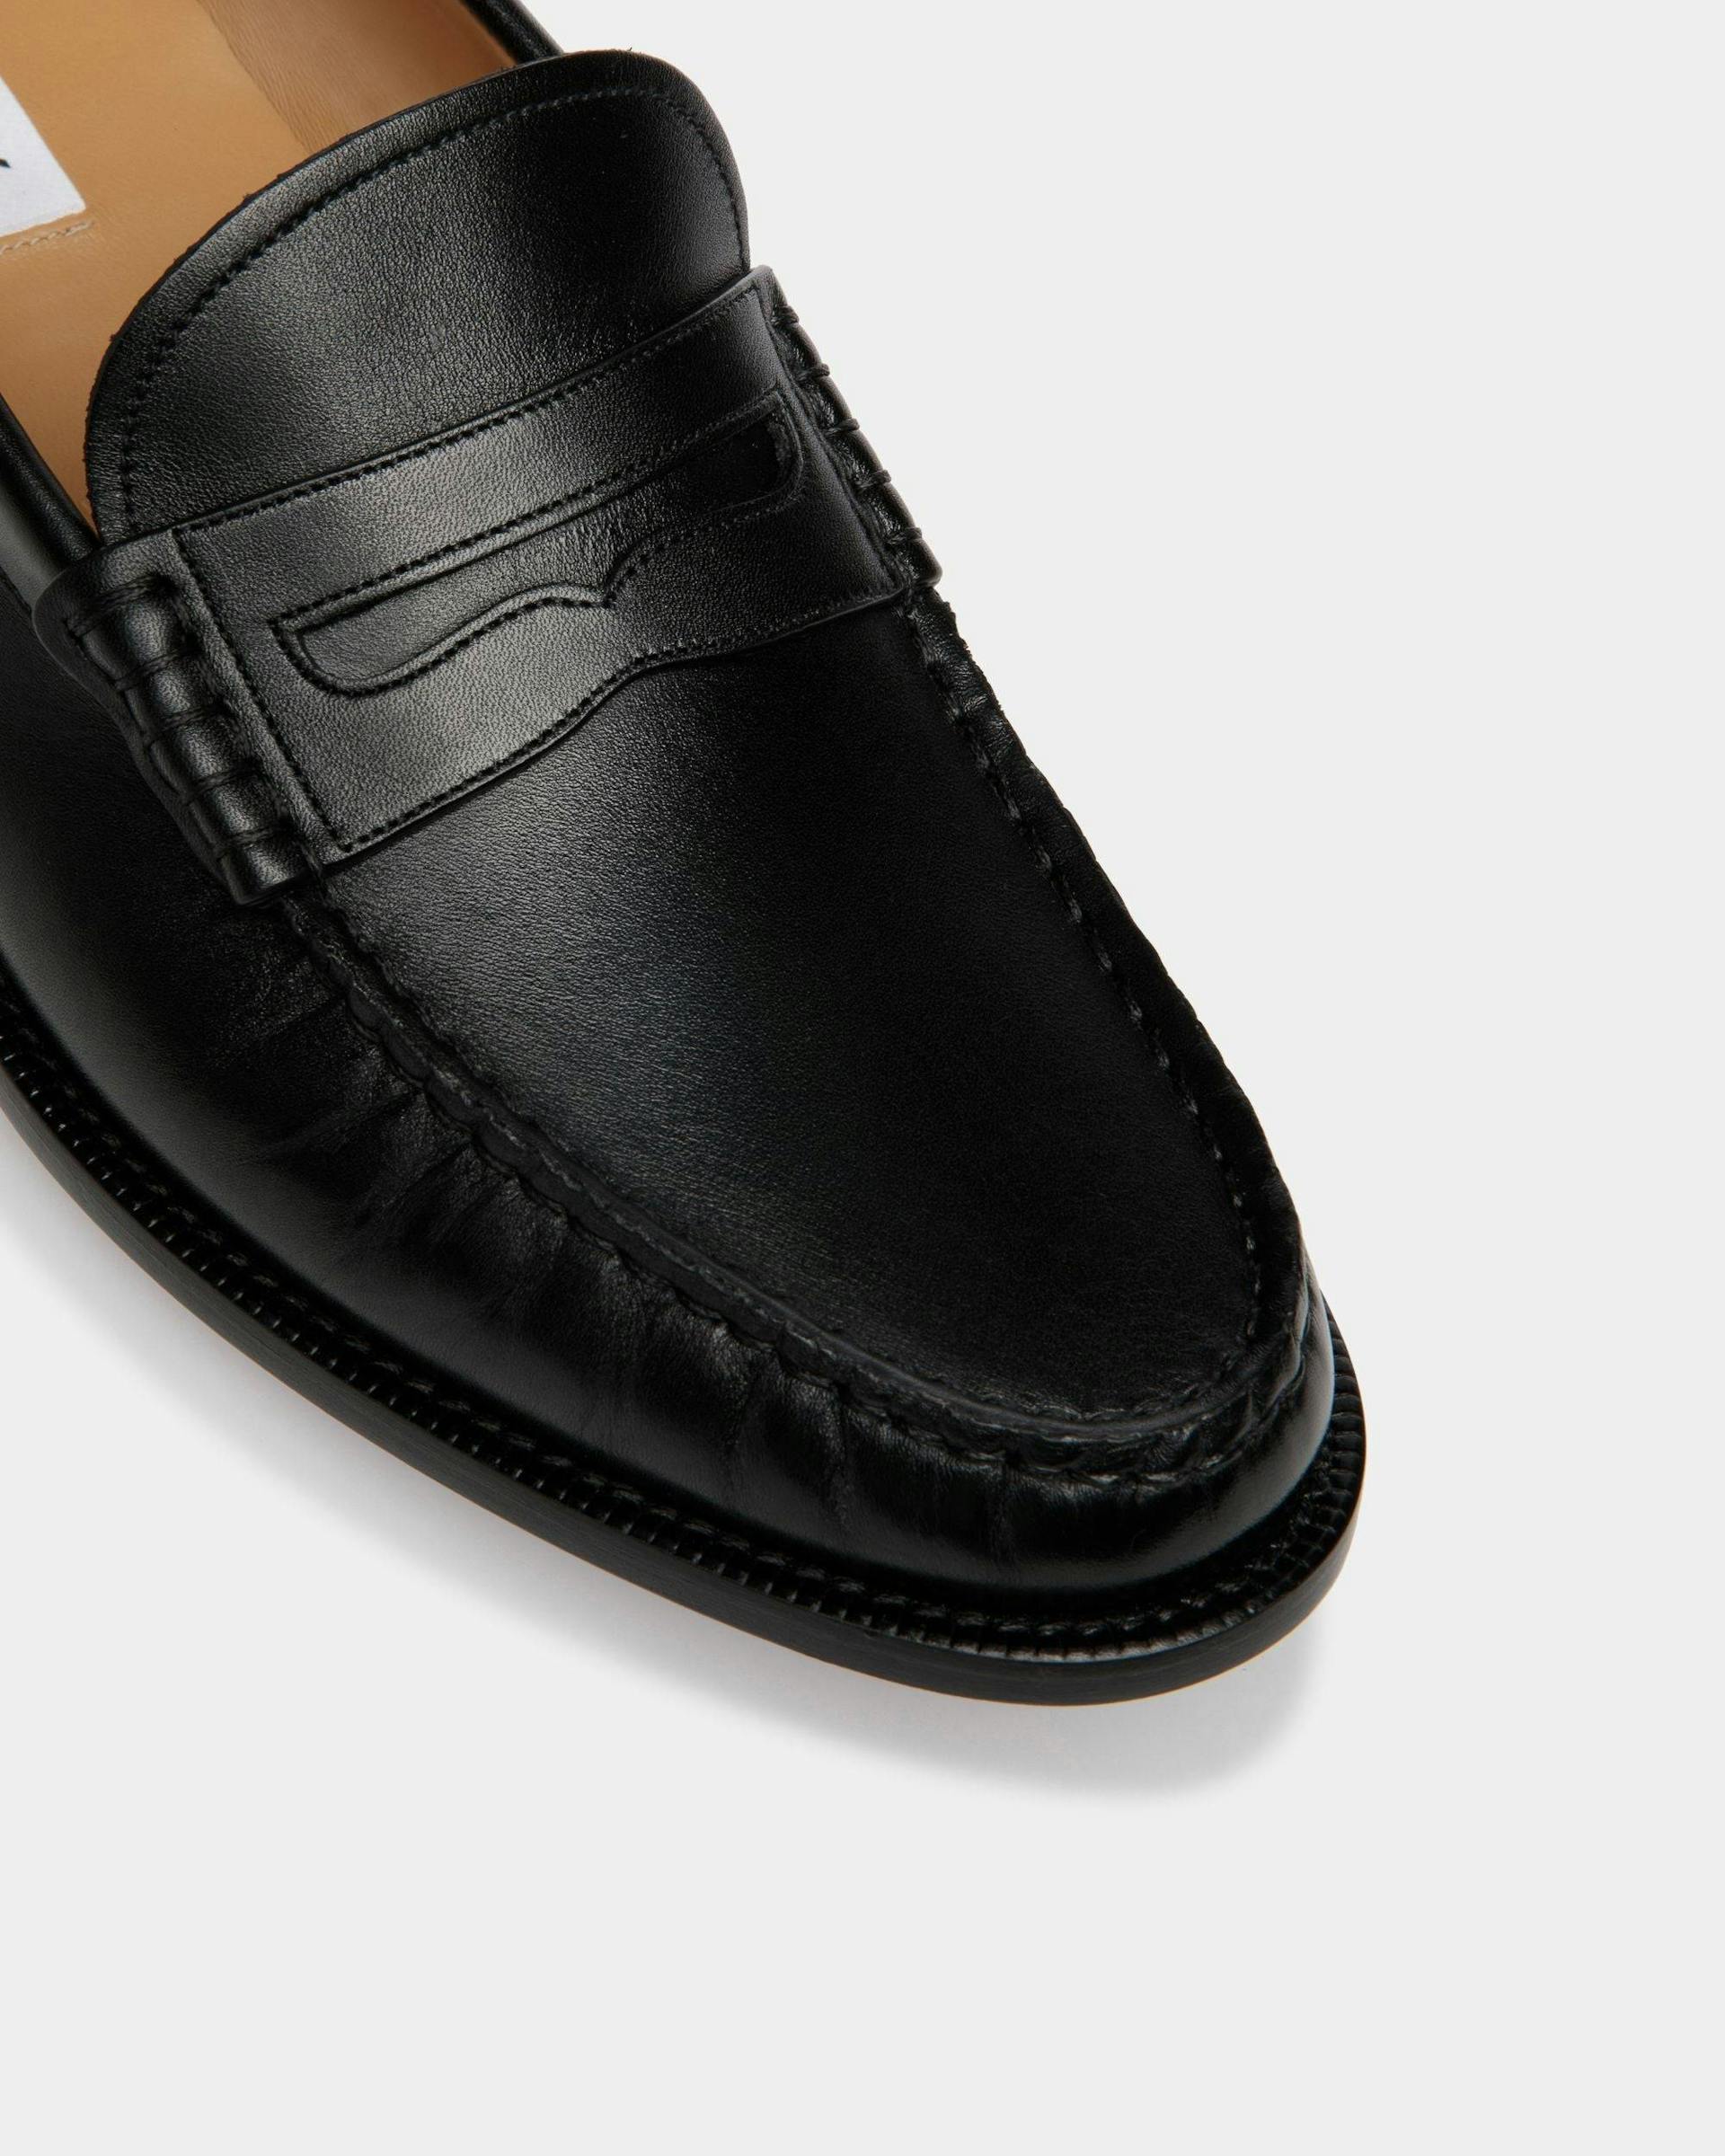 Men's Oregon Loafer in Black Leather | Bally | Still Life Detail